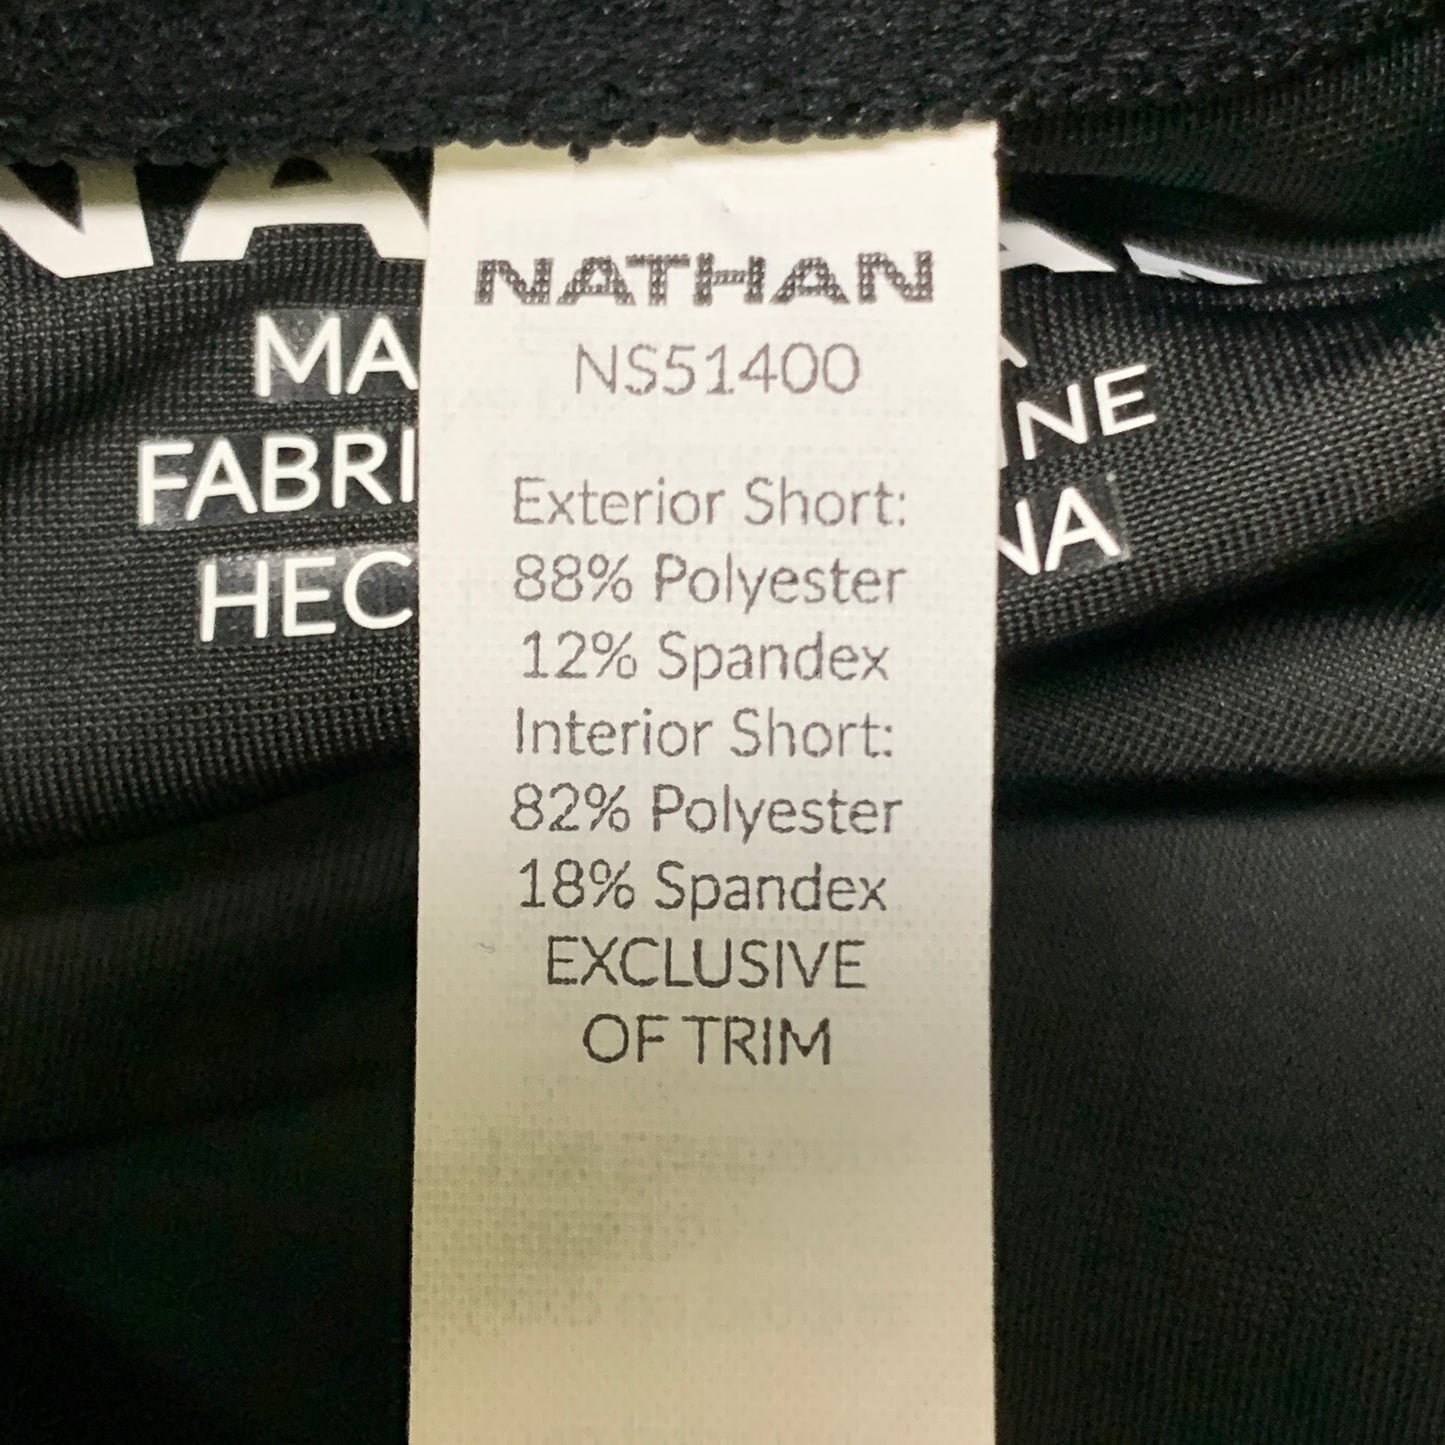 NATHAN Essential Short 2.0 Women's Black Size M NS51400-00001-M